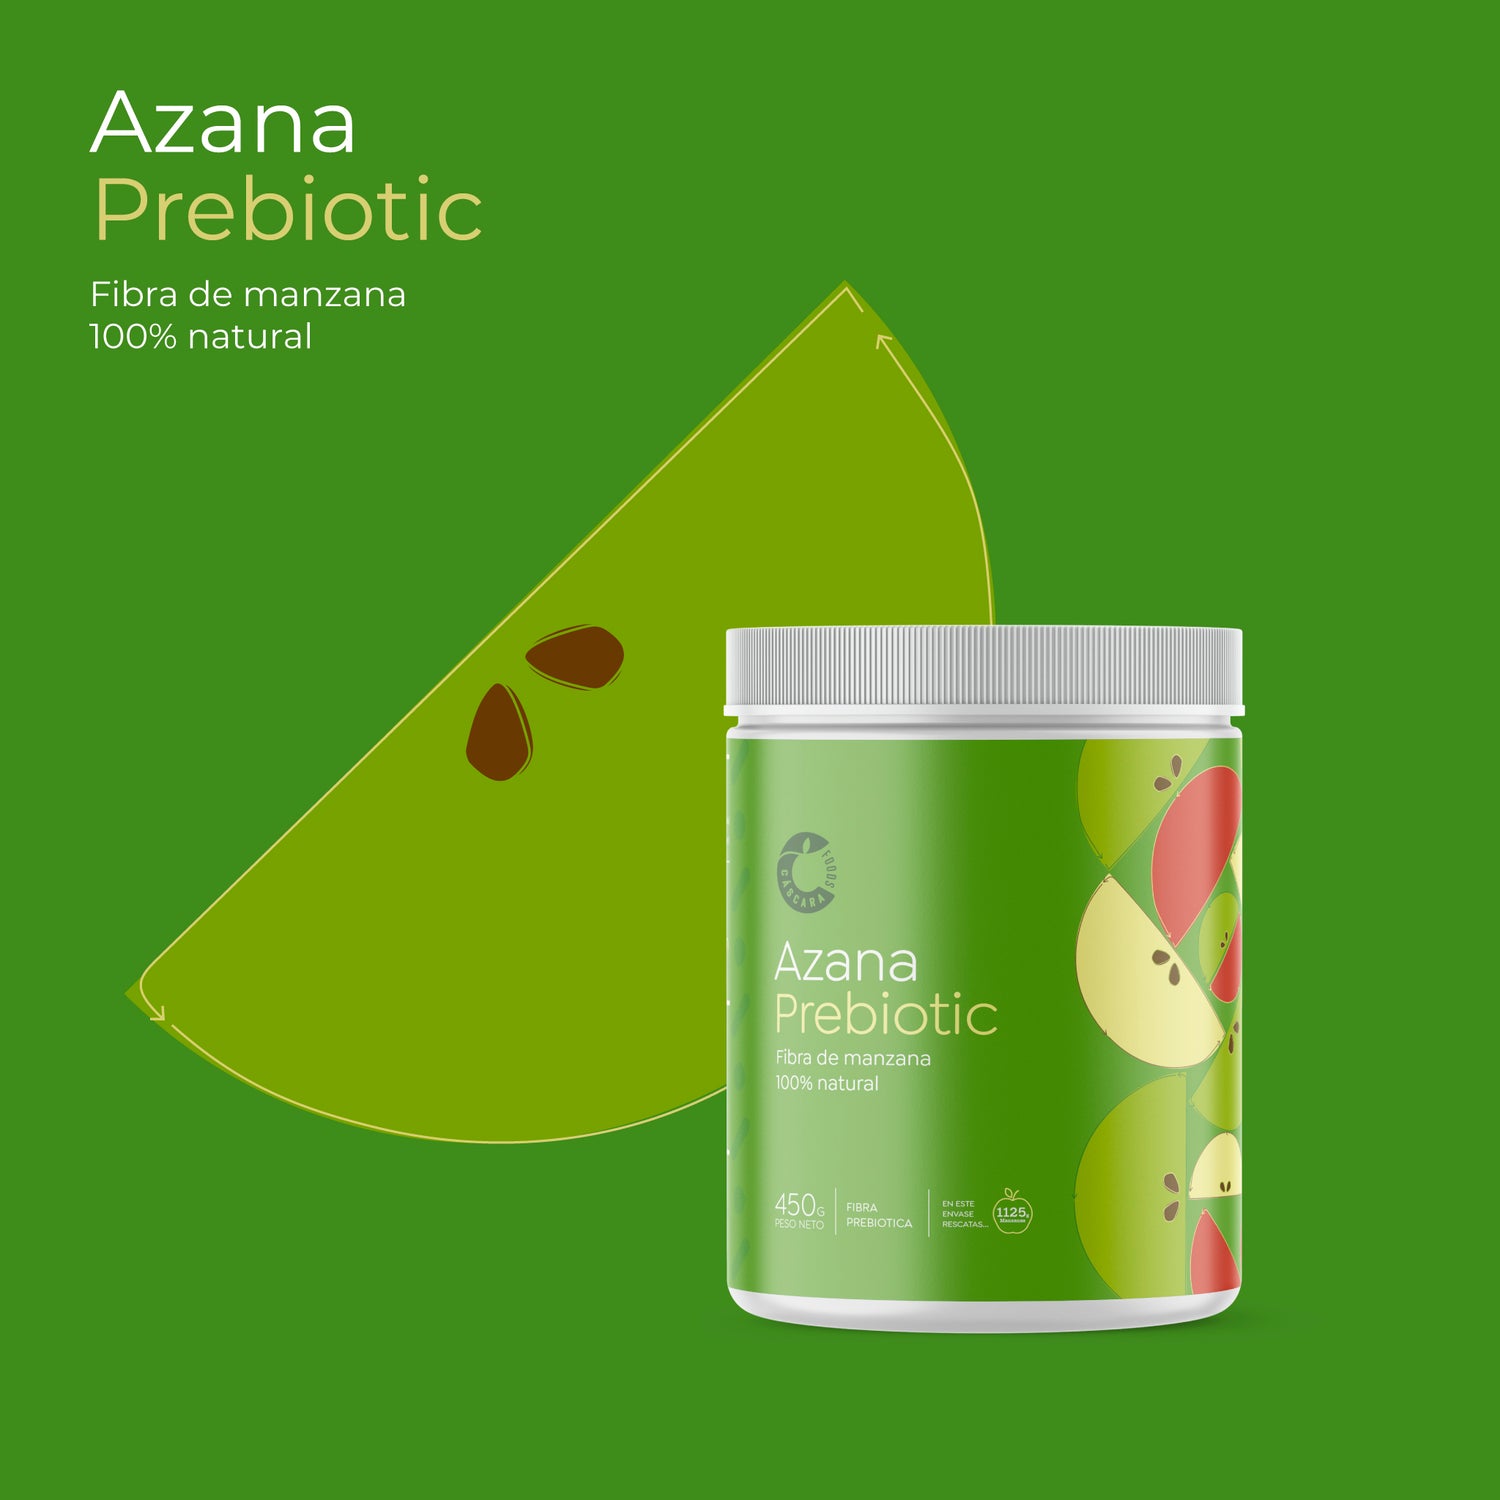 Azana Prebiotic